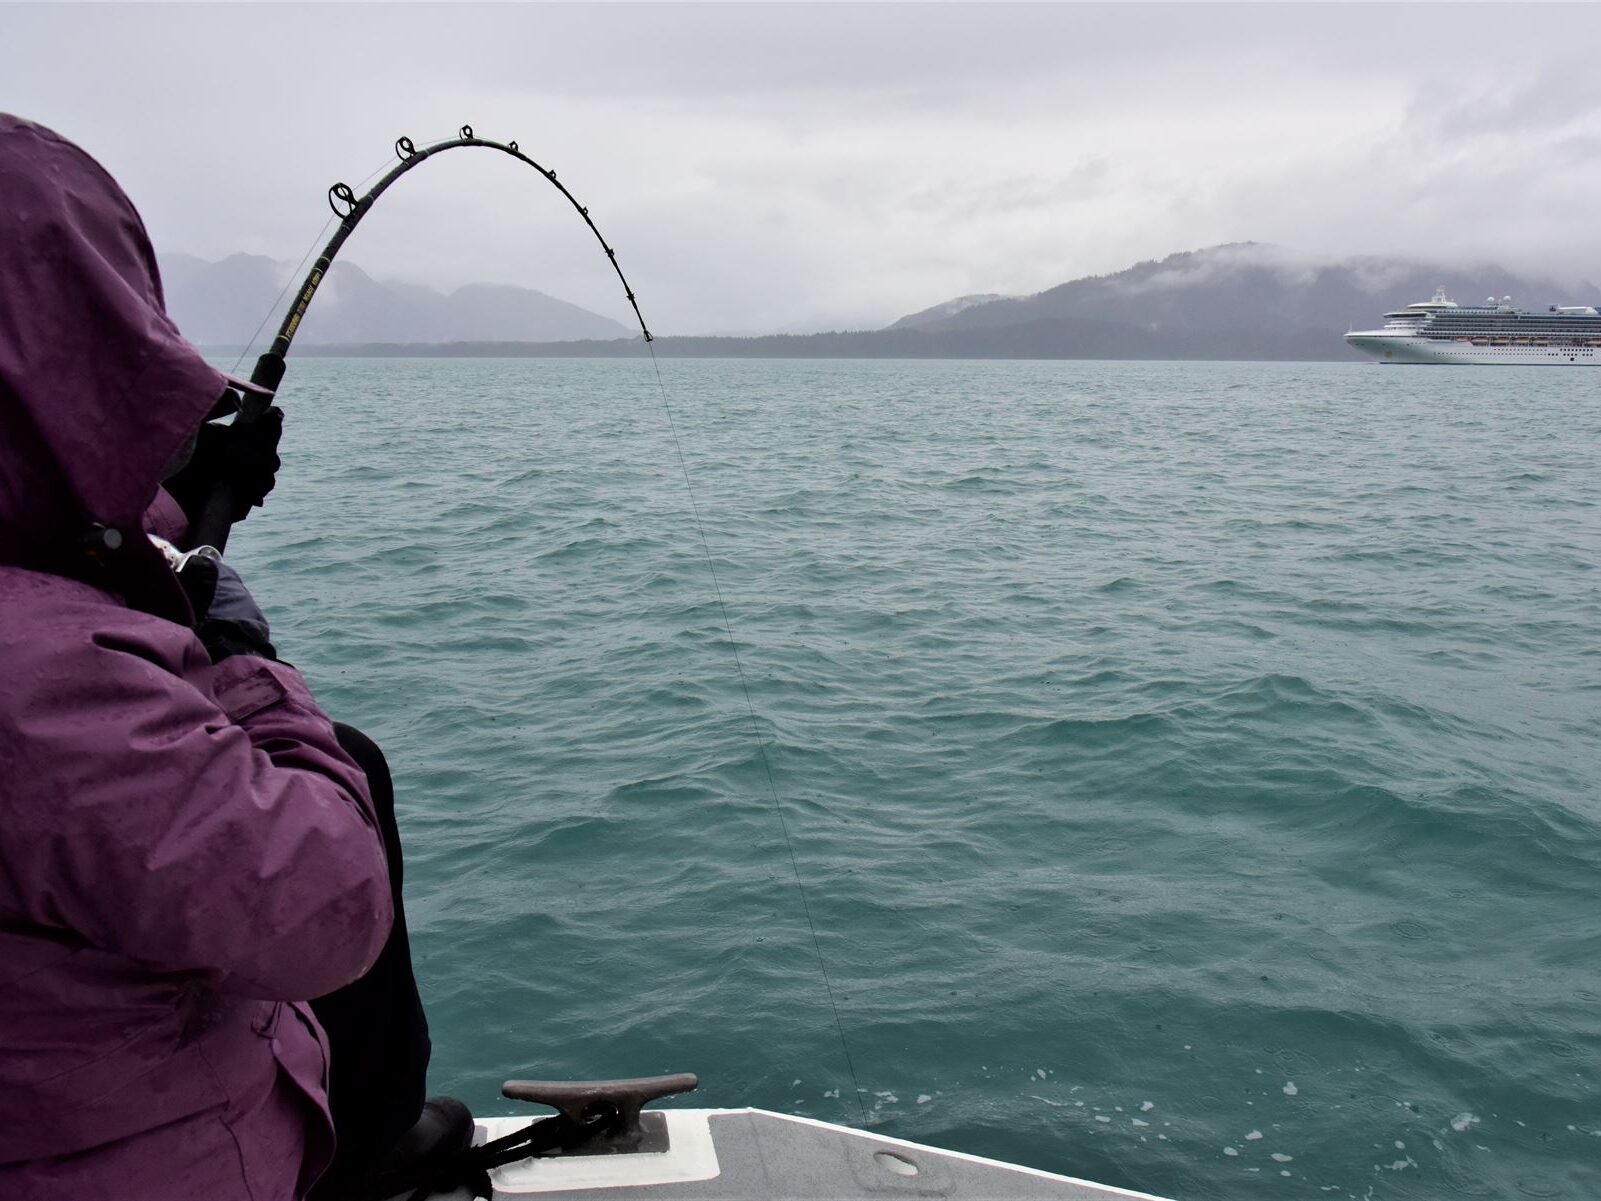 Deep sea fishing off Alaskan coastline